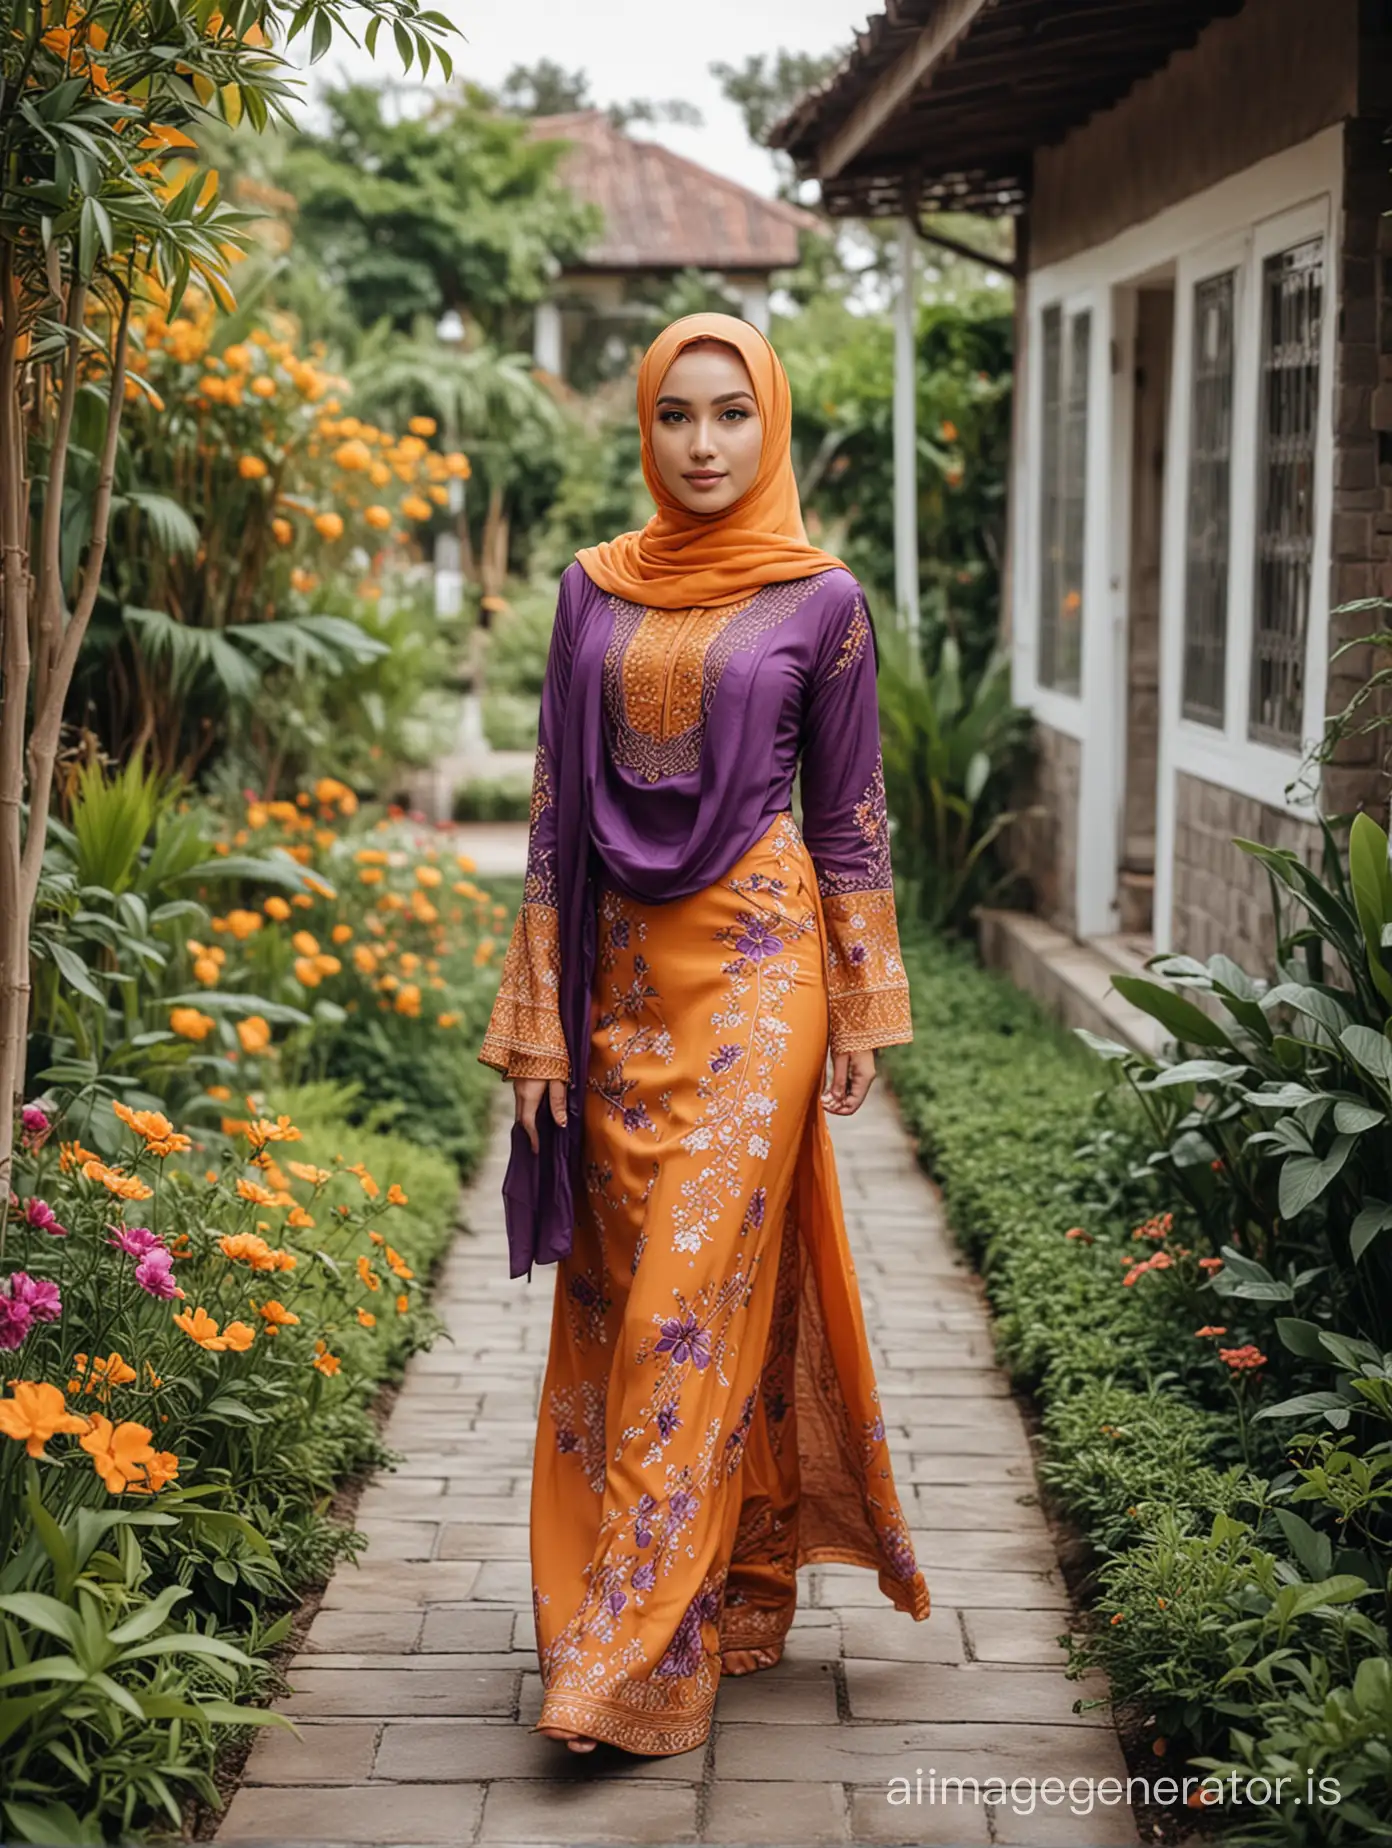 Elegant-Hijabi-Woman-Strolling-in-Colorful-Garden-Setting